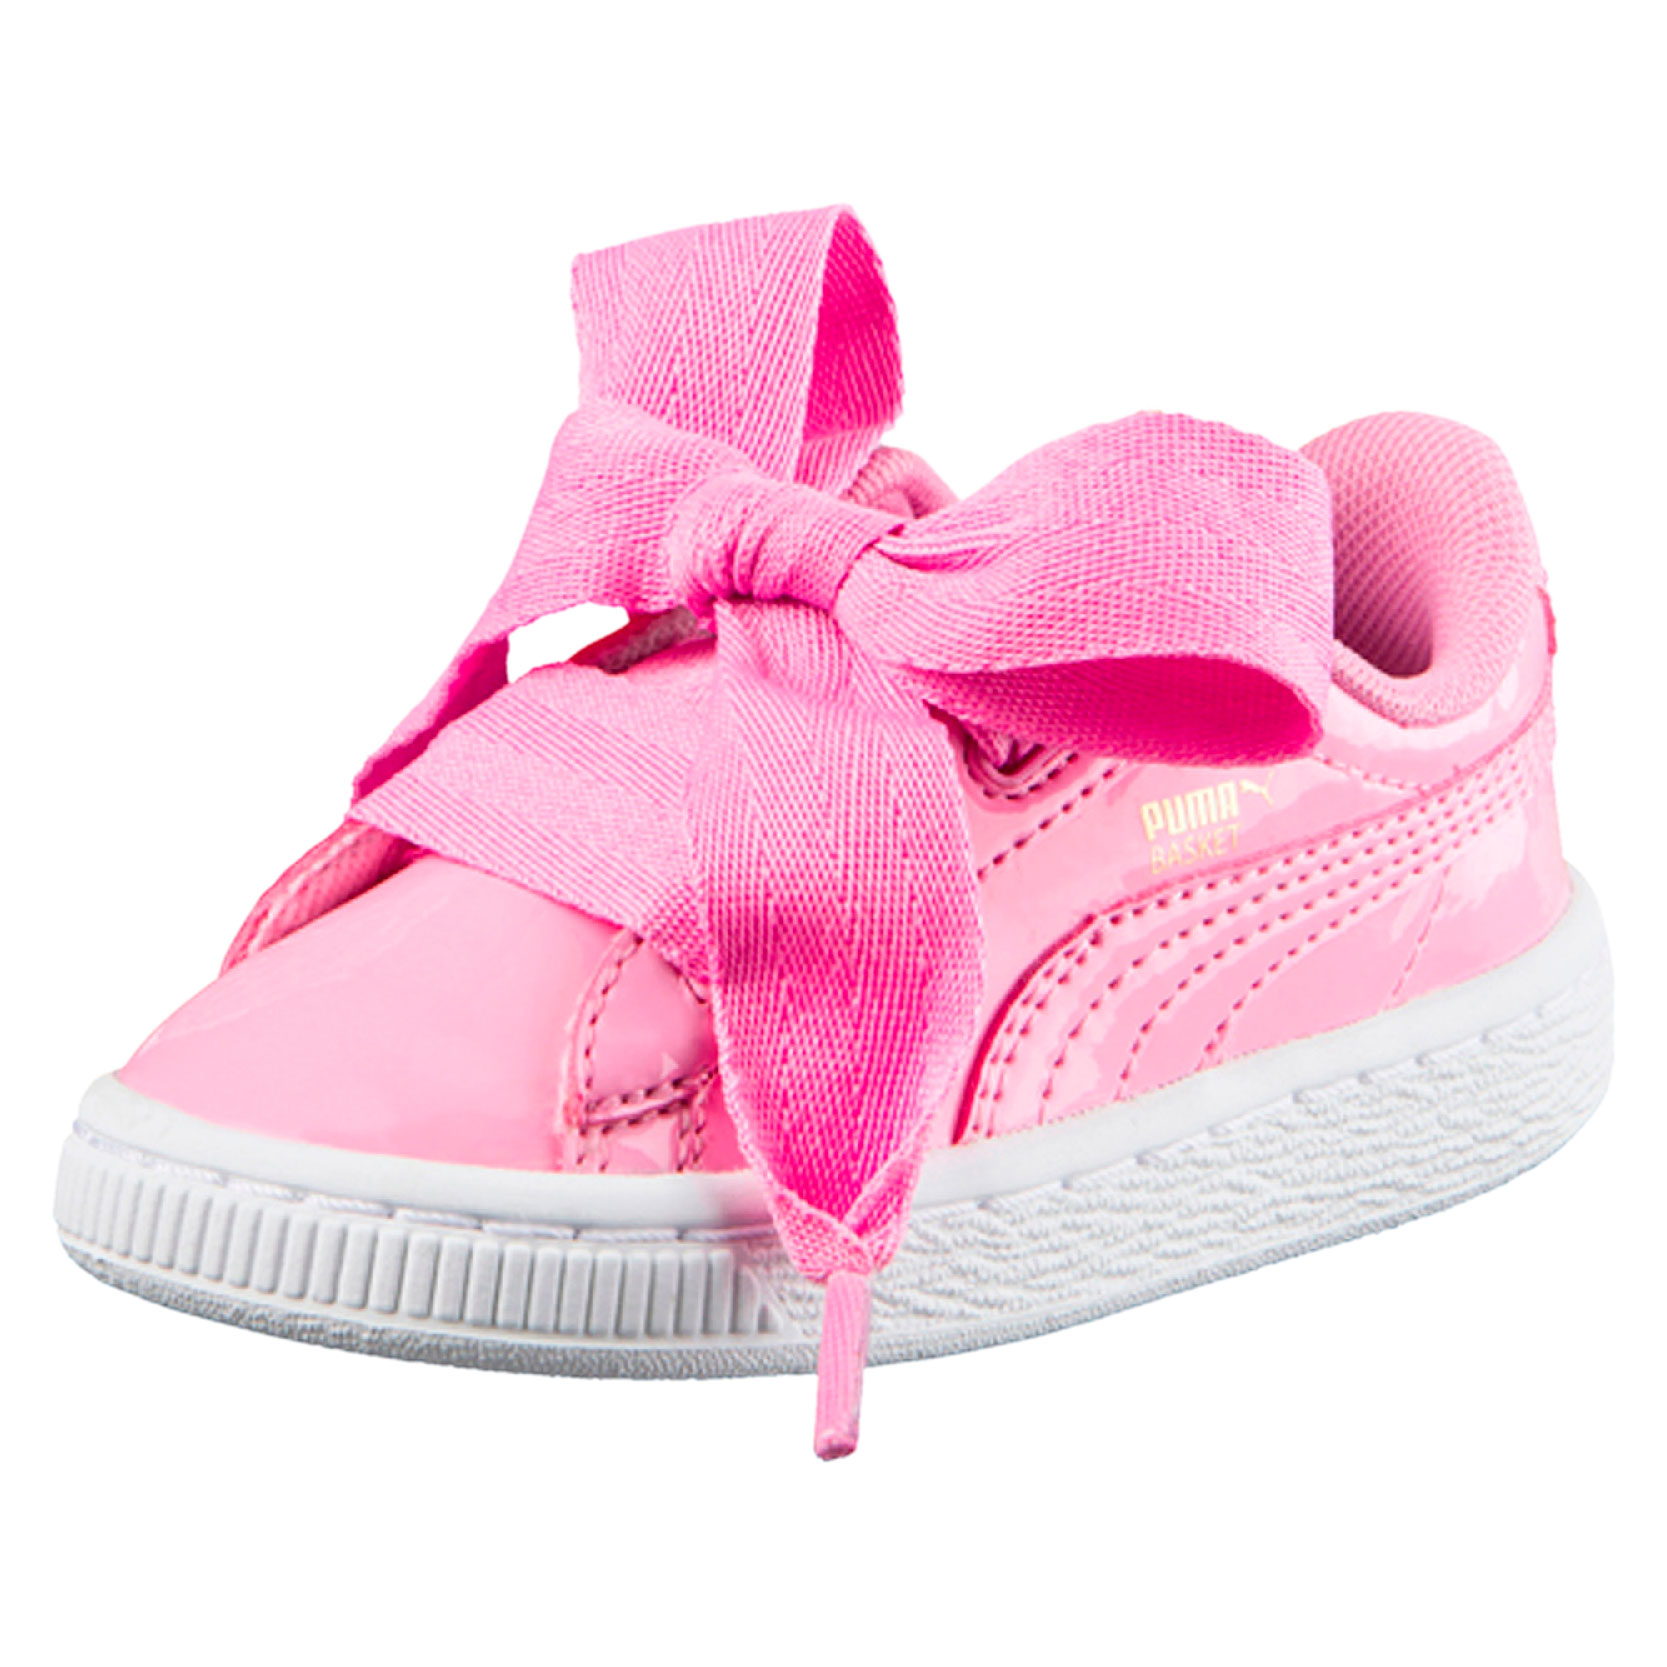 puma basket heart patent baby shoes